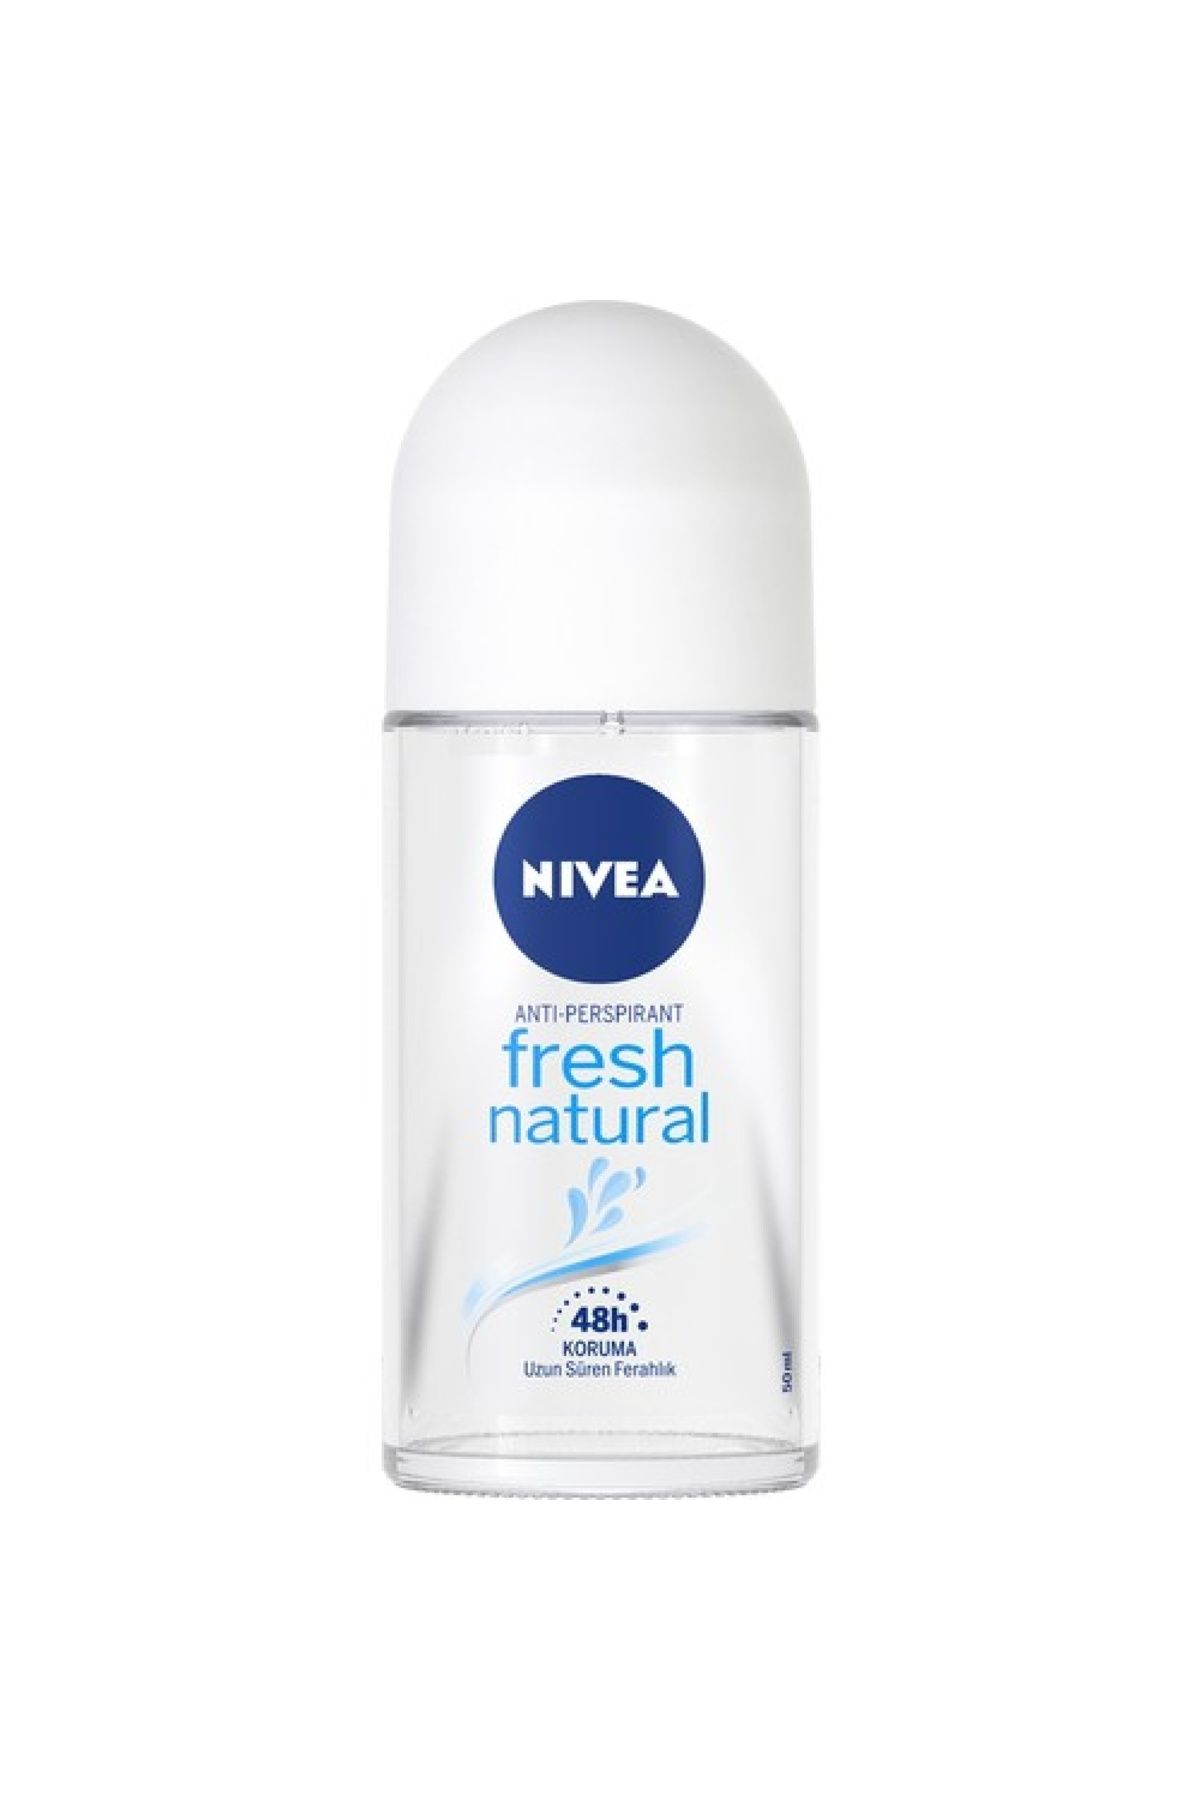 NIVEA Kadın Roll-on Fresh 50 ml